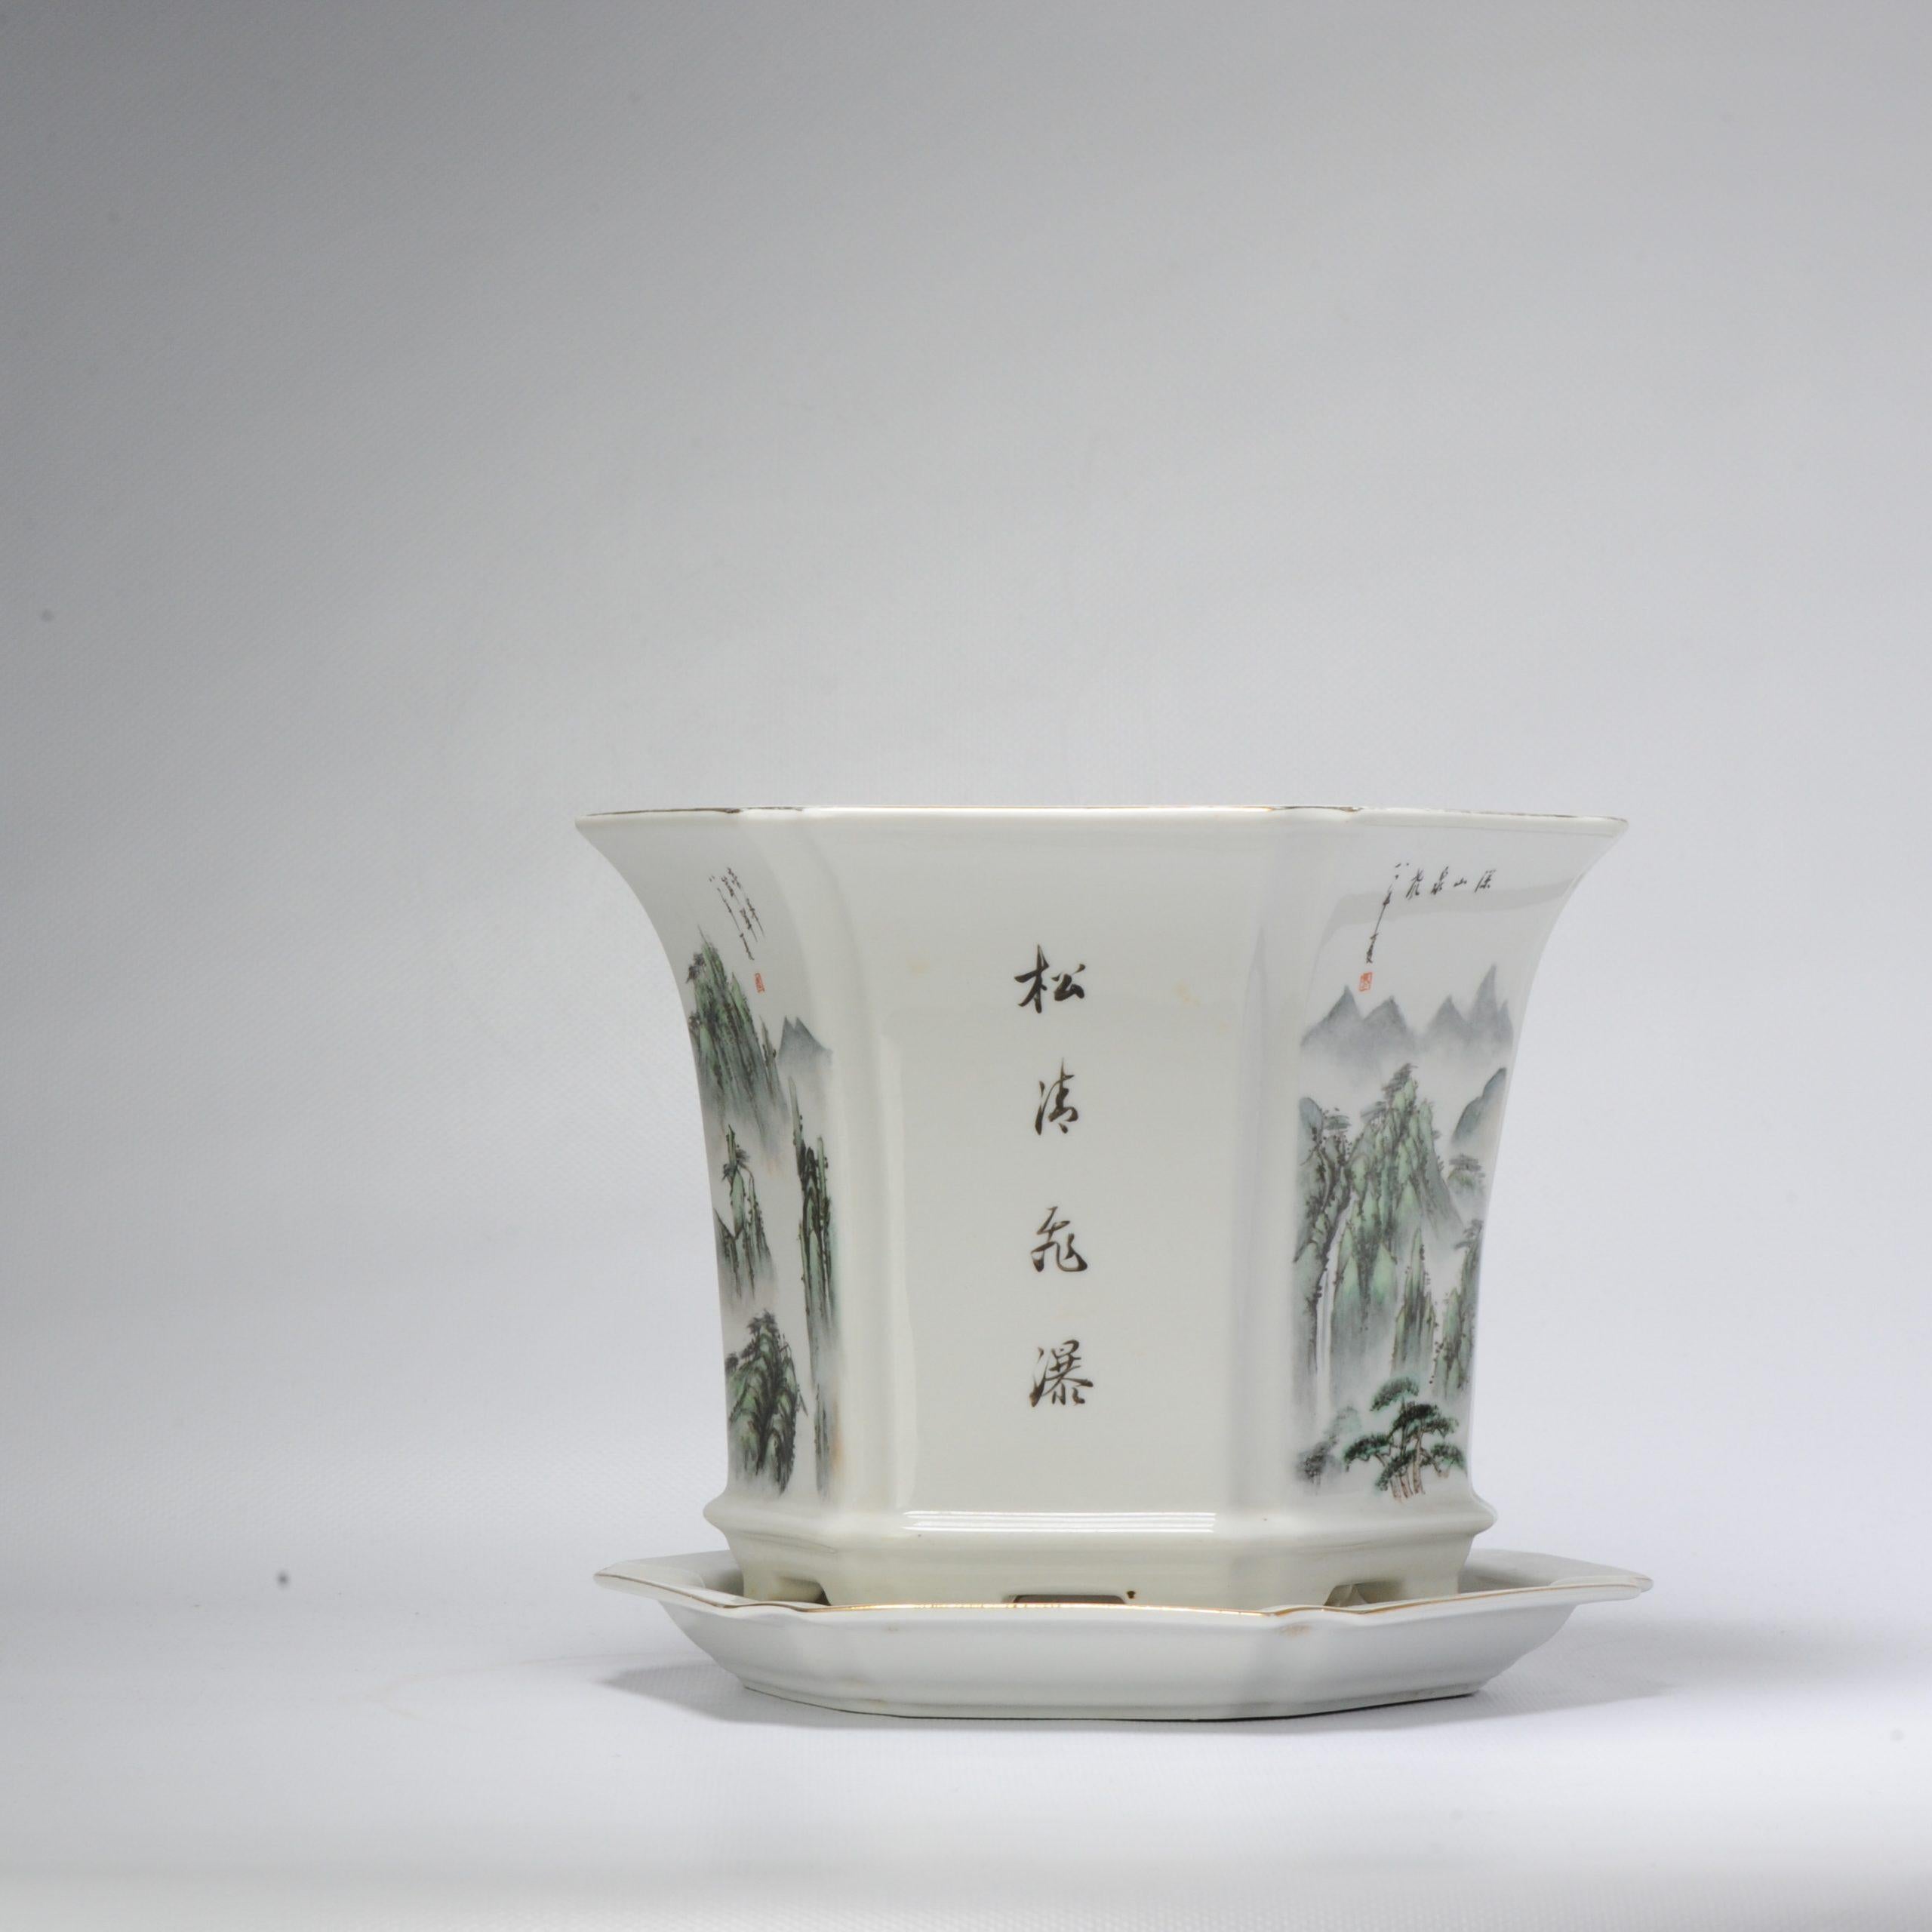 Other Rare Vintage 1981 Chinese Porcelain Proc Landscape Jardiniere Planter China For Sale